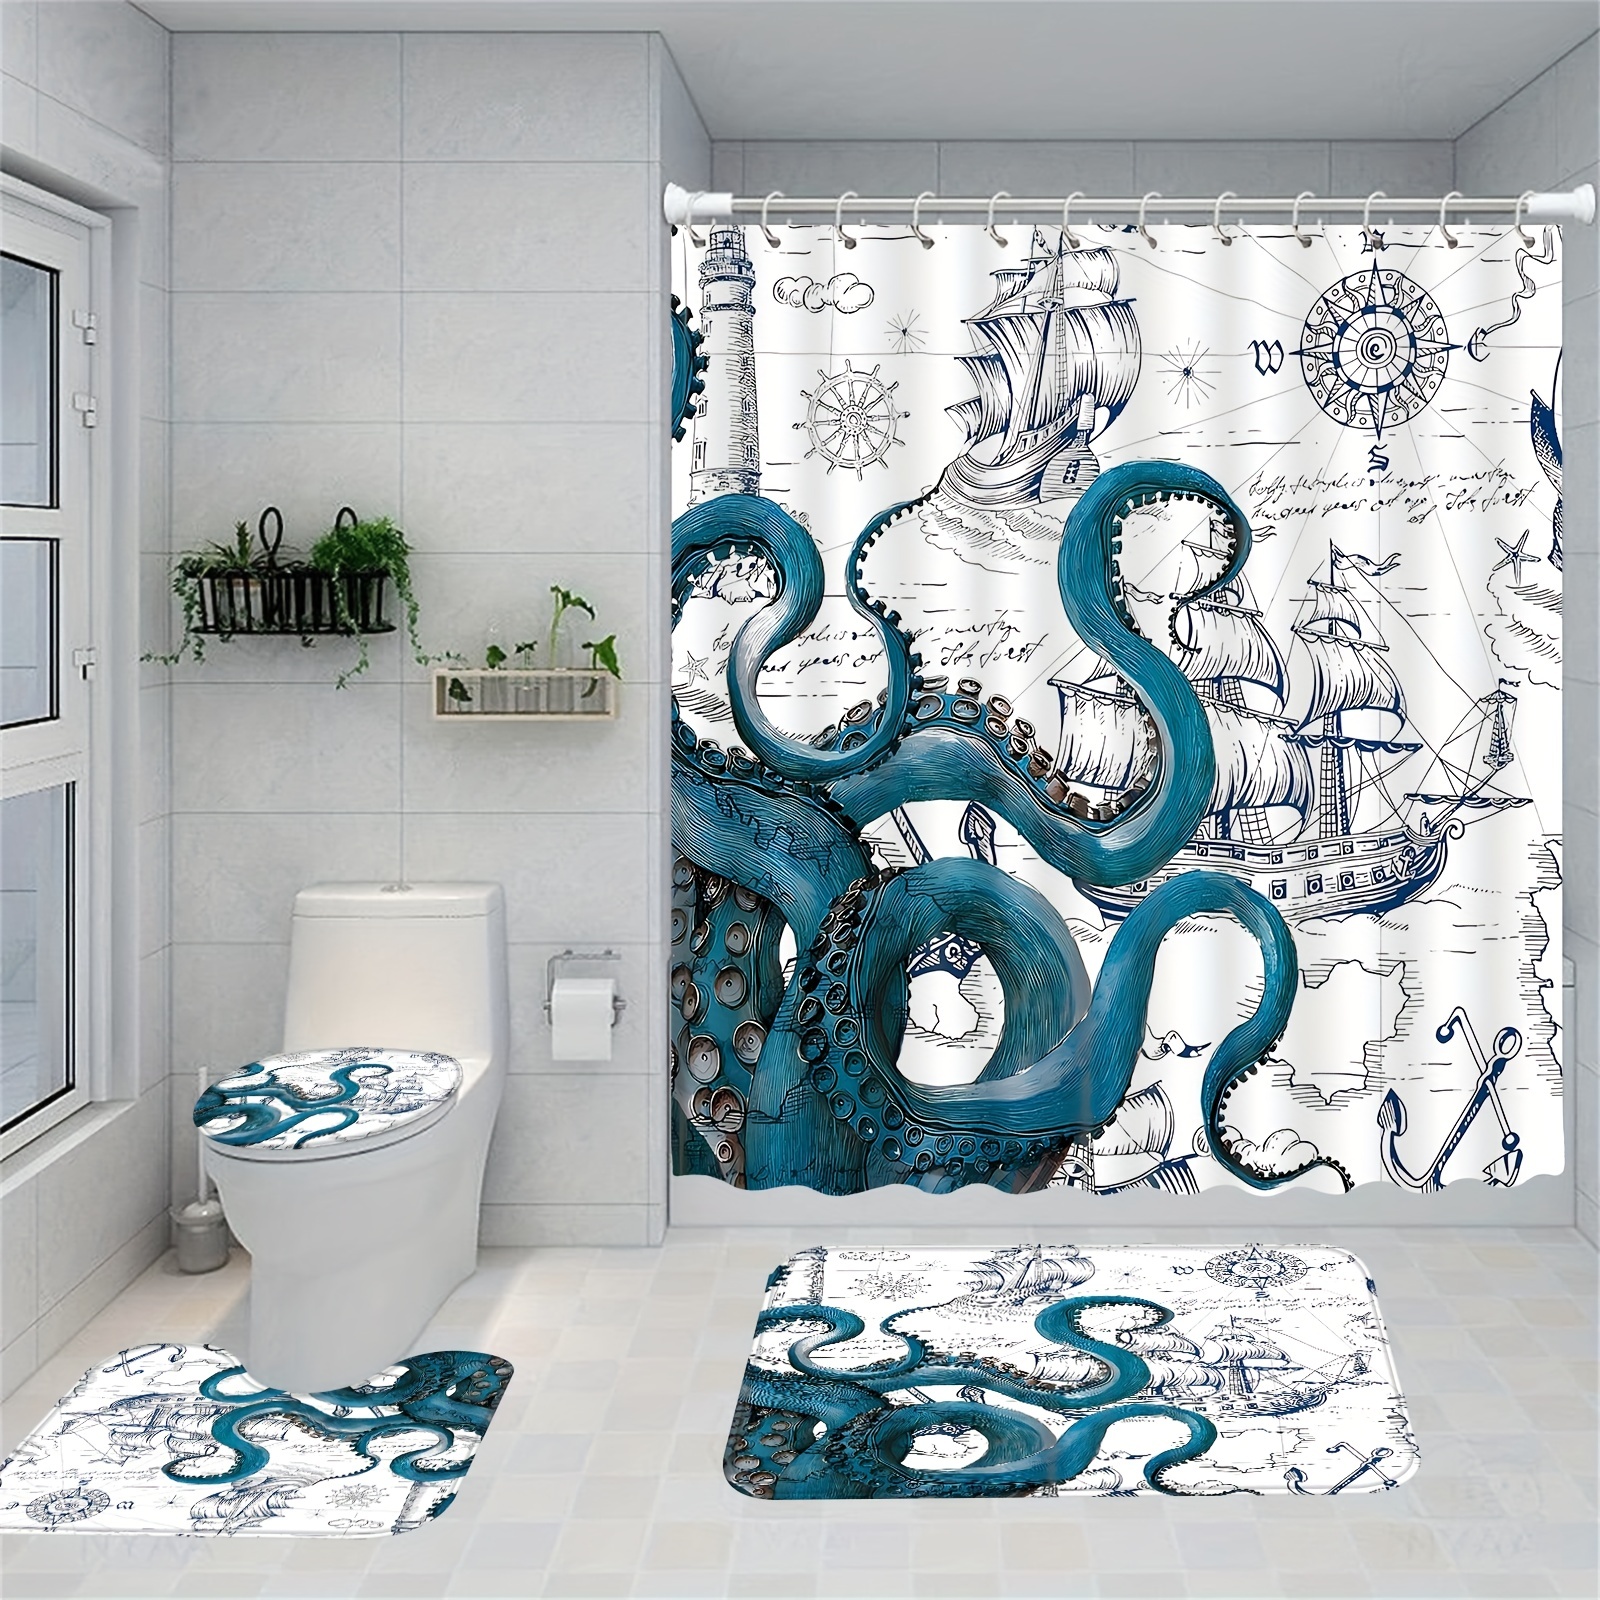 Antideslizantes para bañeras medusas. Pegatinas antideslizantes baños.  Decoración azulejos baños. Decoración con medusas bañeras y duchas -   México